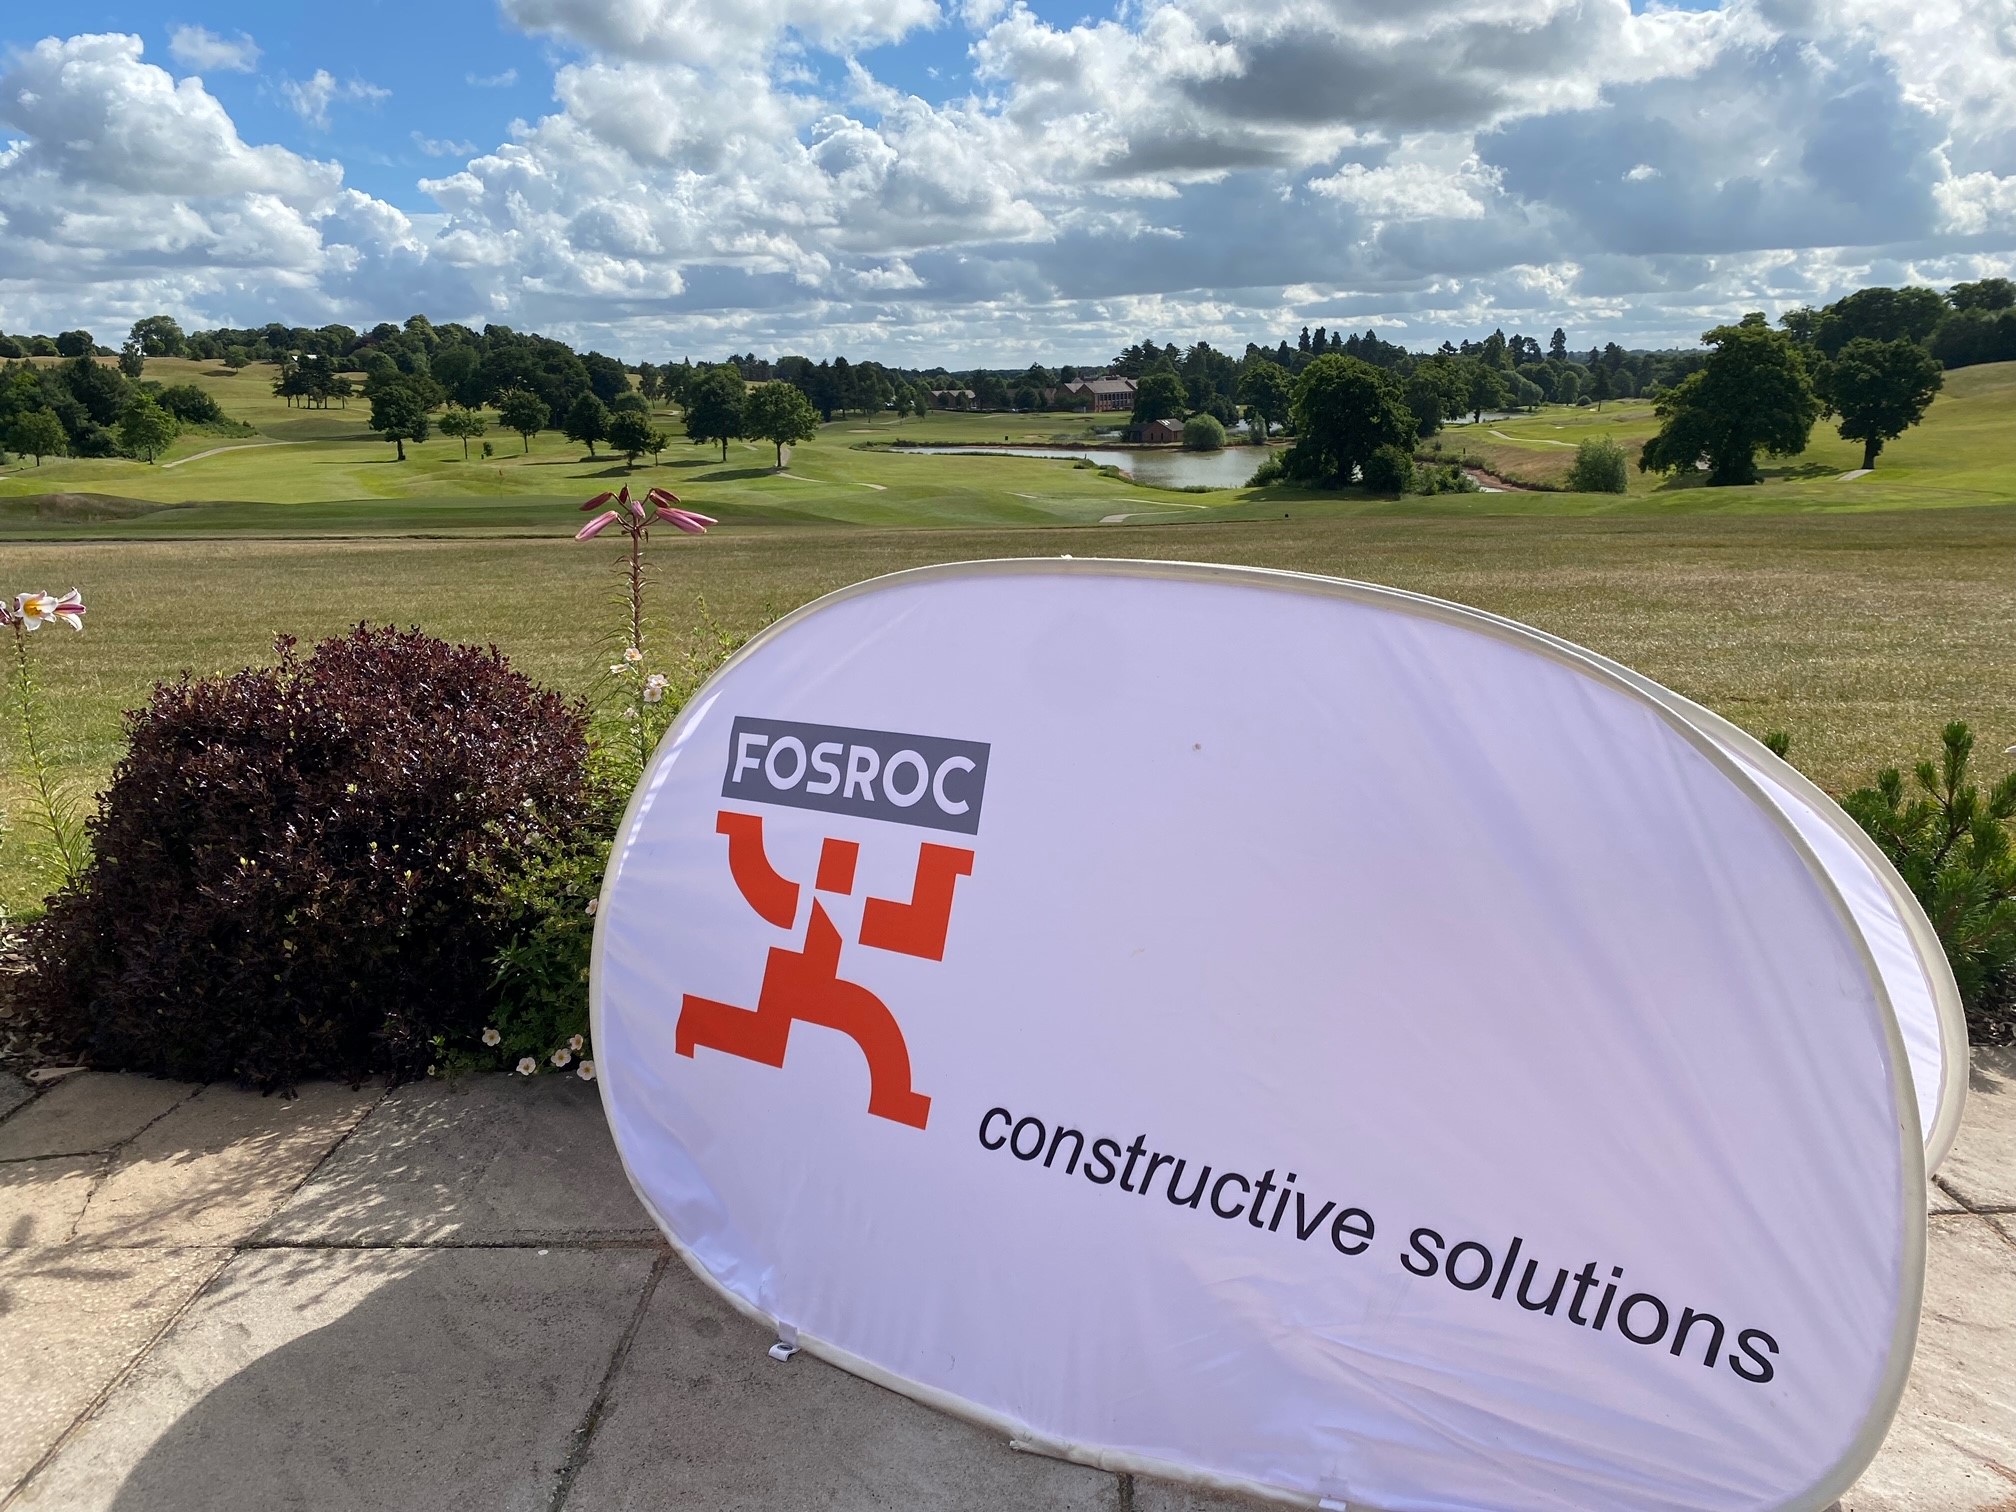 Fosroc Constructive Solutions Golf Day 2022